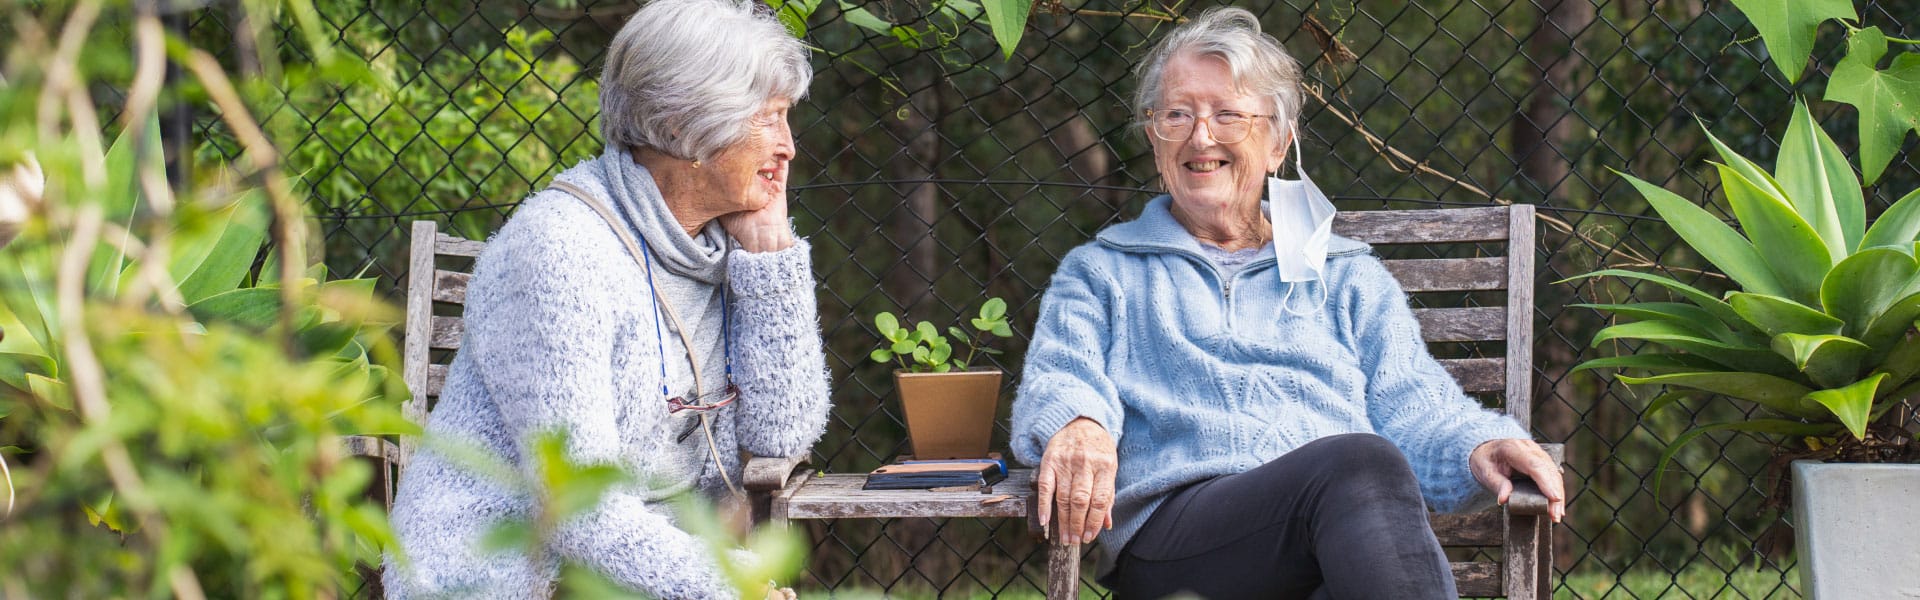 Two elderly female friends sitting chatting in a garden